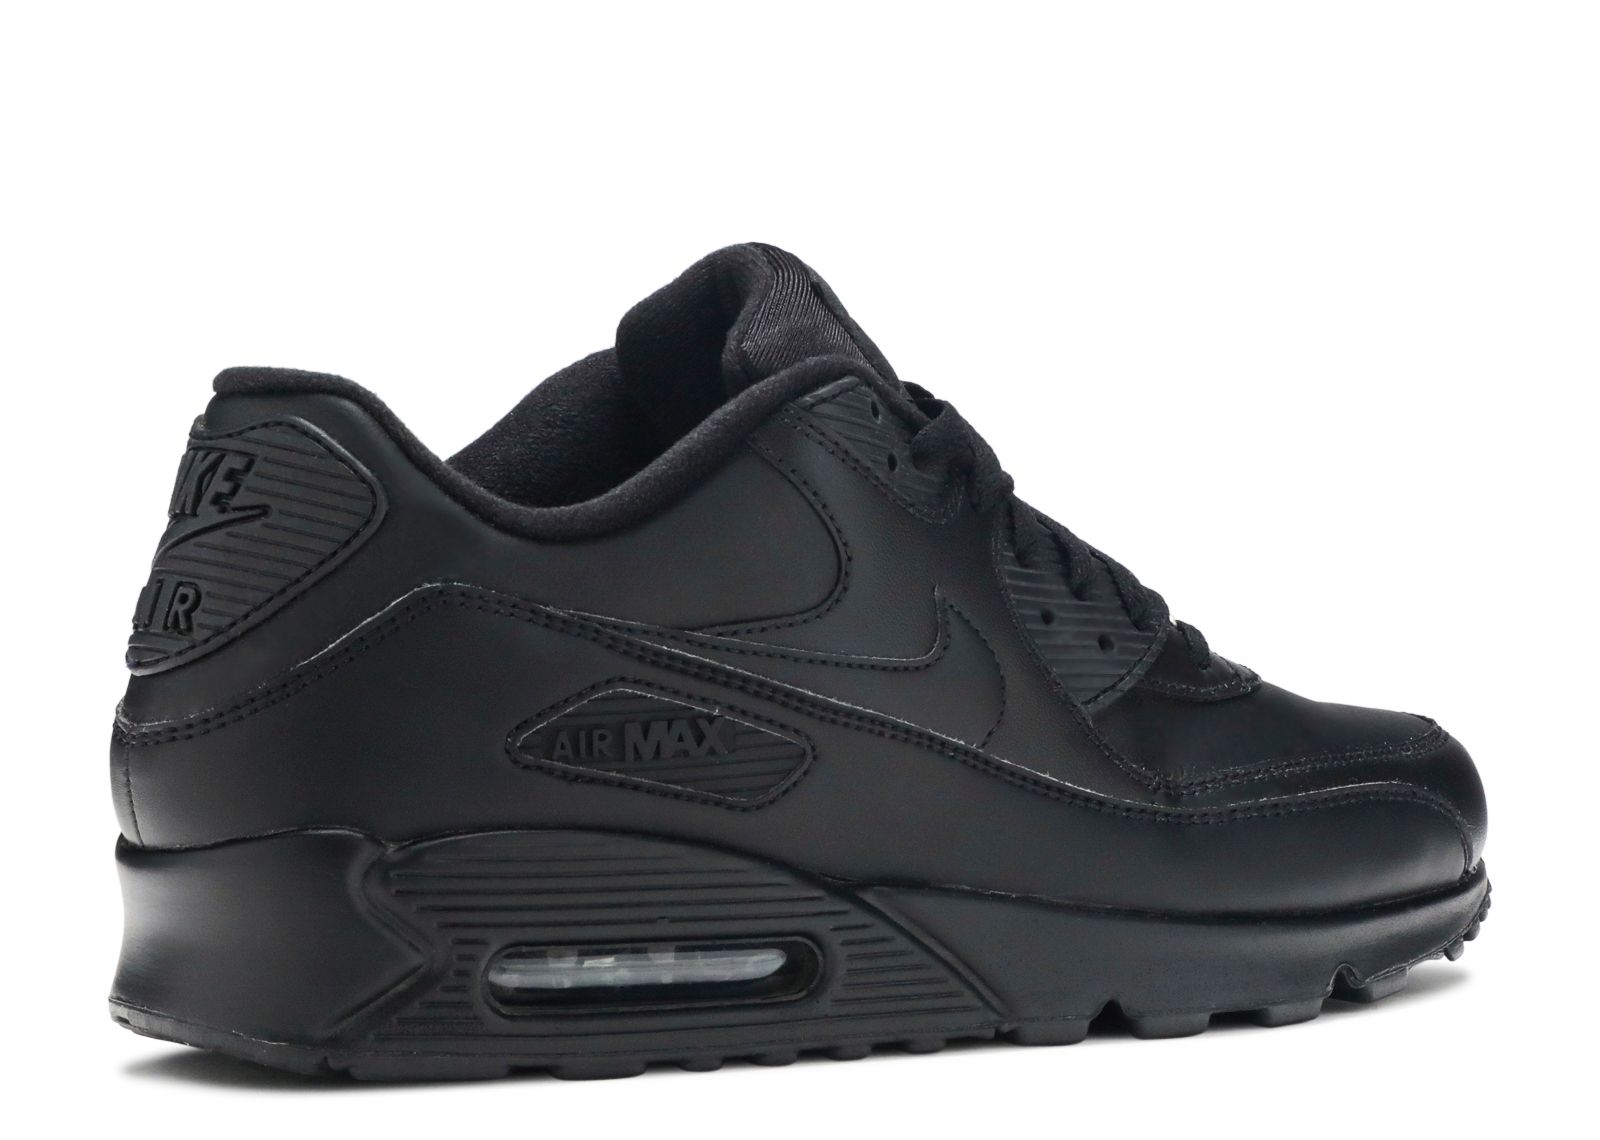 Air Max 90 Leather 'Black' - Nike - 302519 001 - black/black | Flight ...